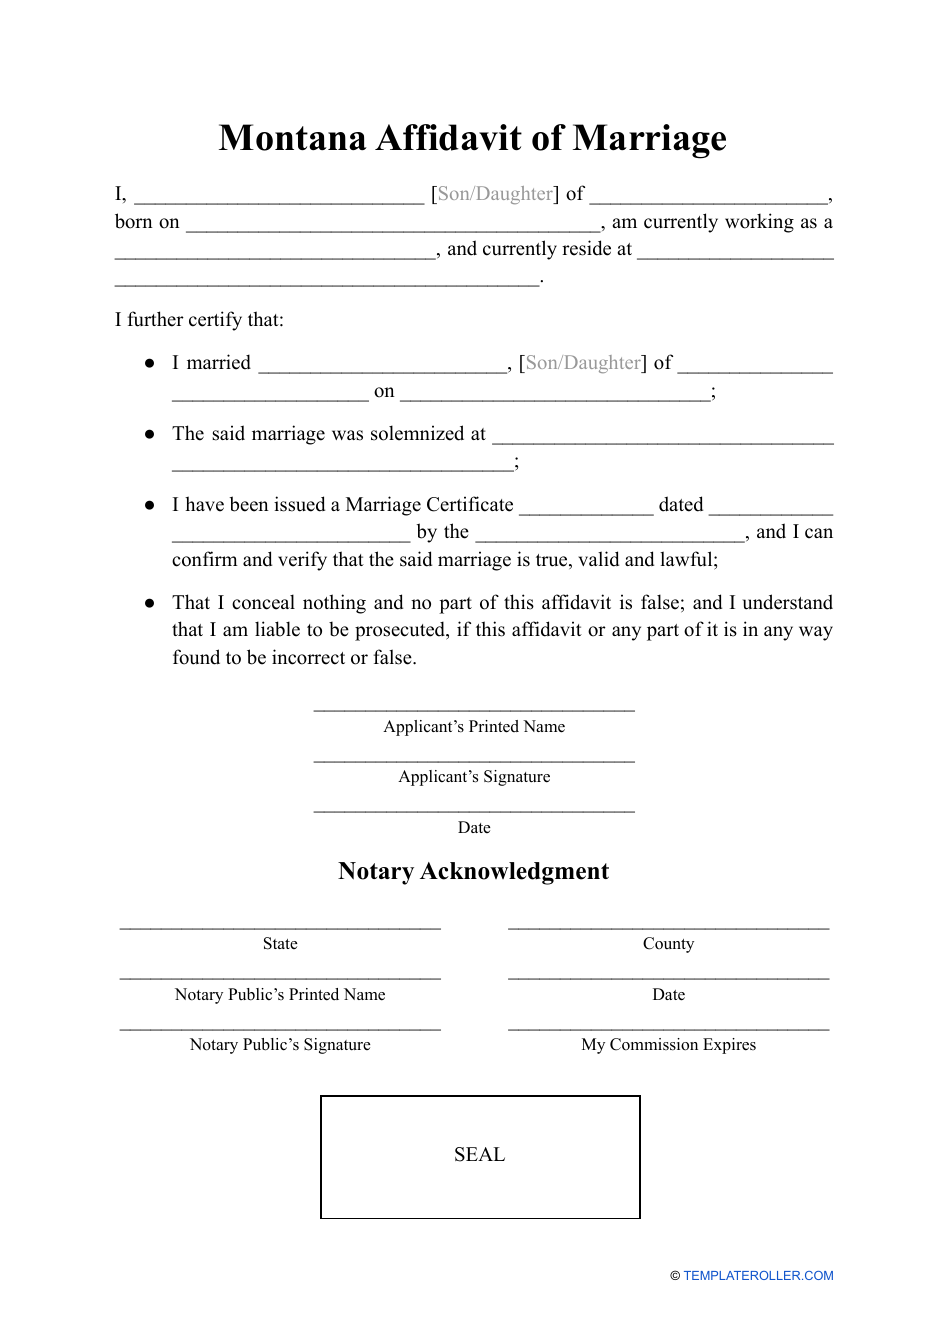 Affidavit of Marriage - Montana, Page 1